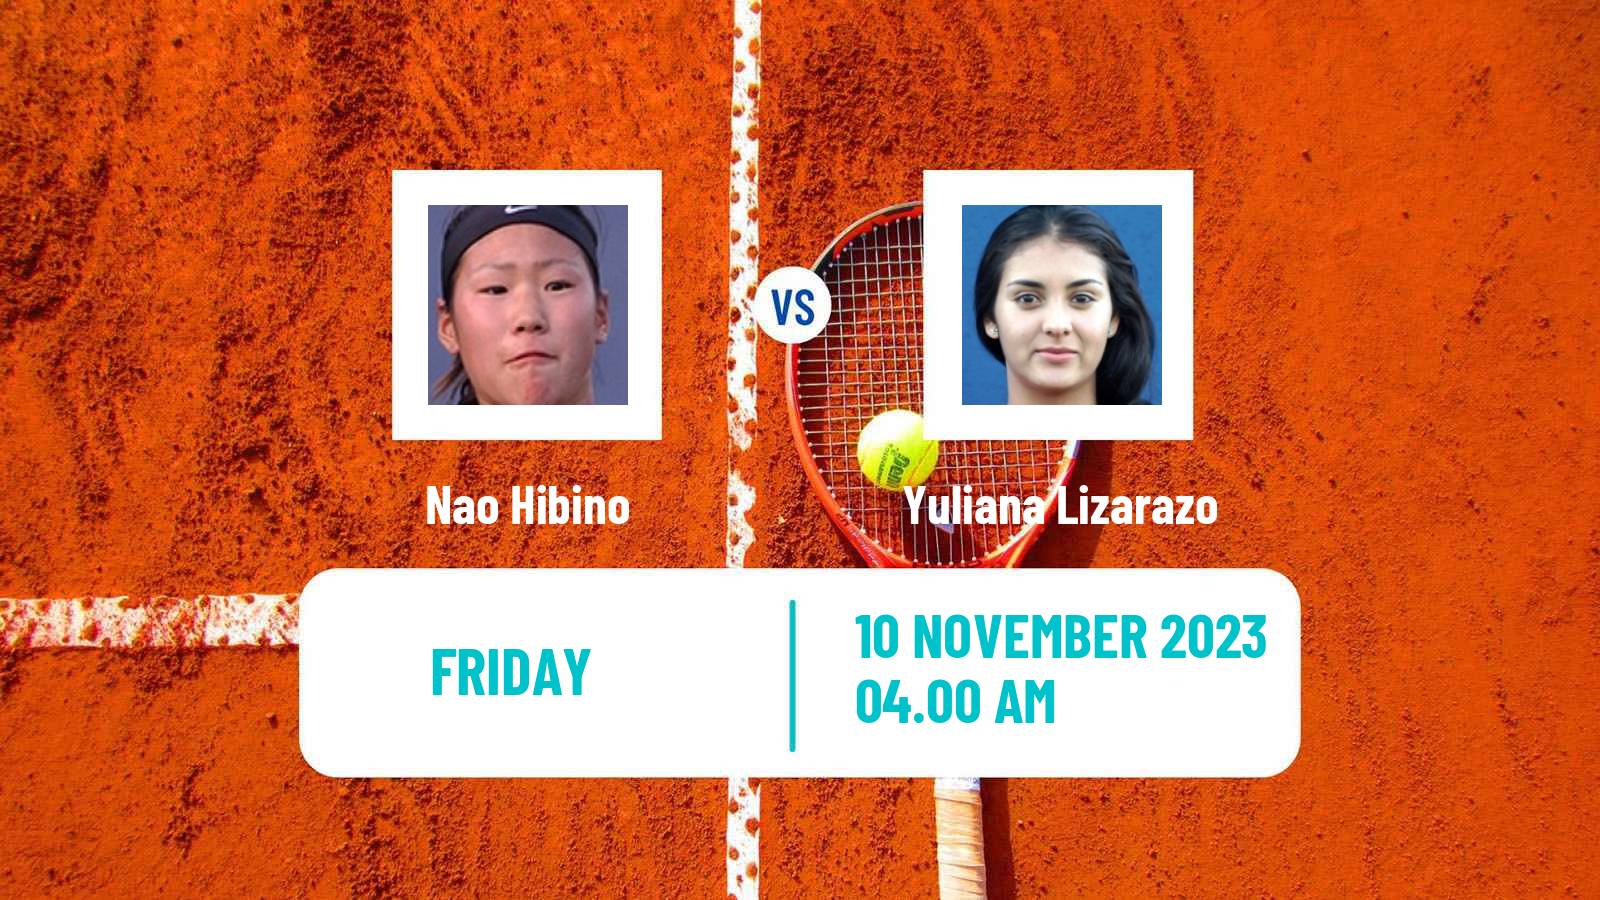 Tennis WTA Billie Jean King Cup World Group Nao Hibino - Yuliana Lizarazo